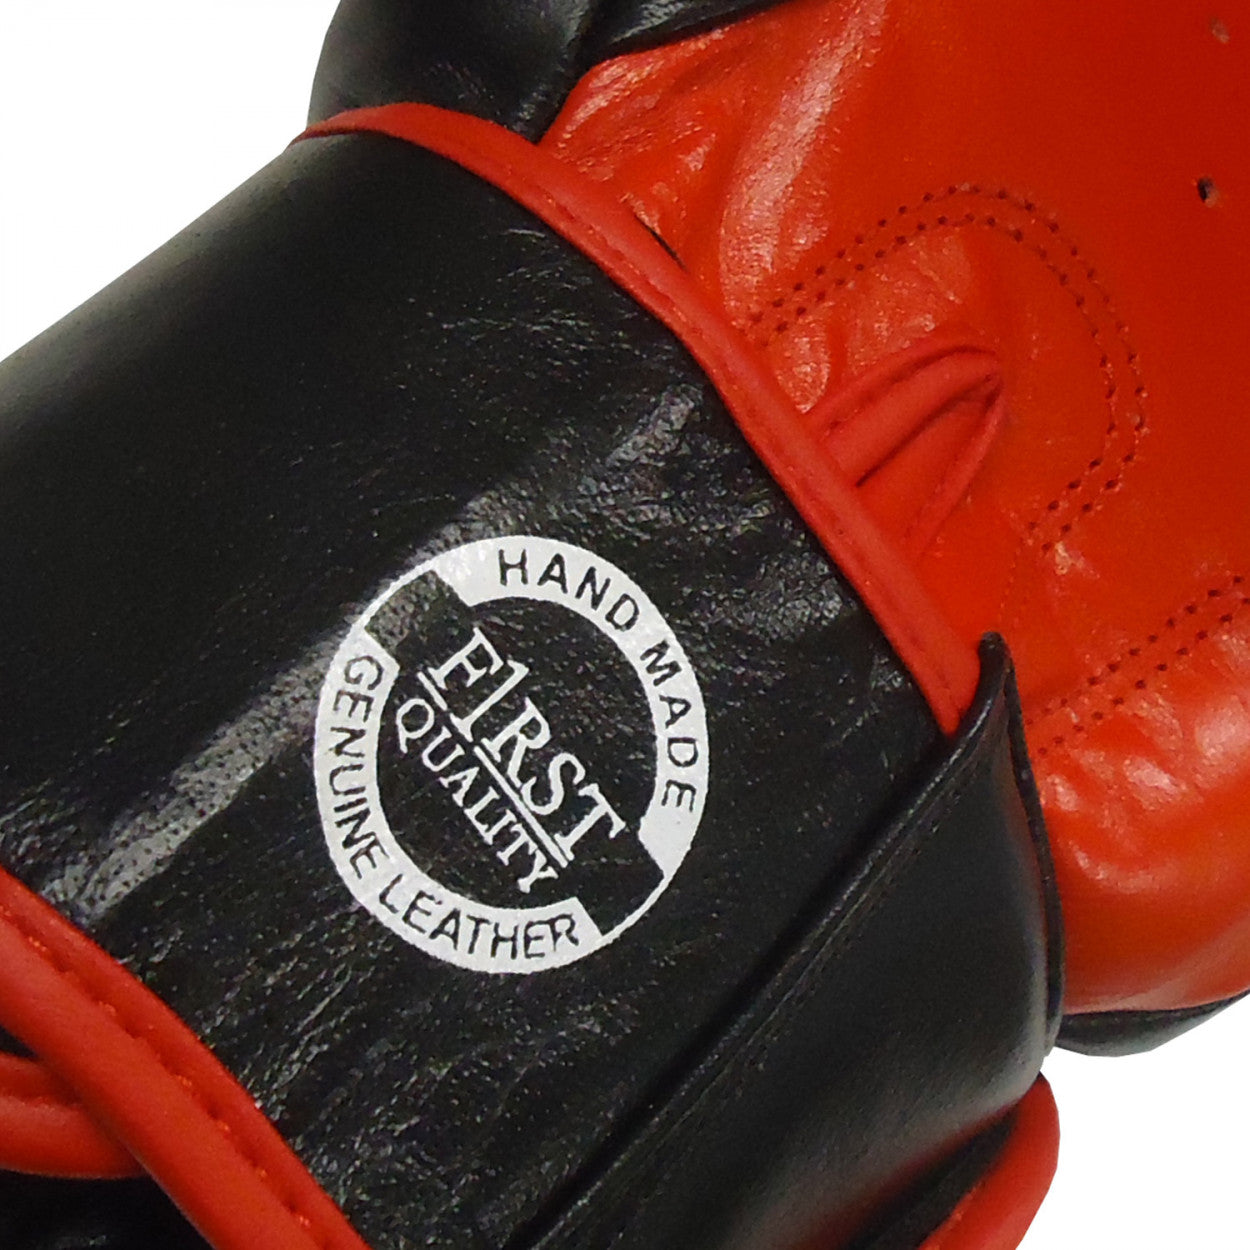 Boxing Gloves Olympus MUYATHAI Design Black/Red